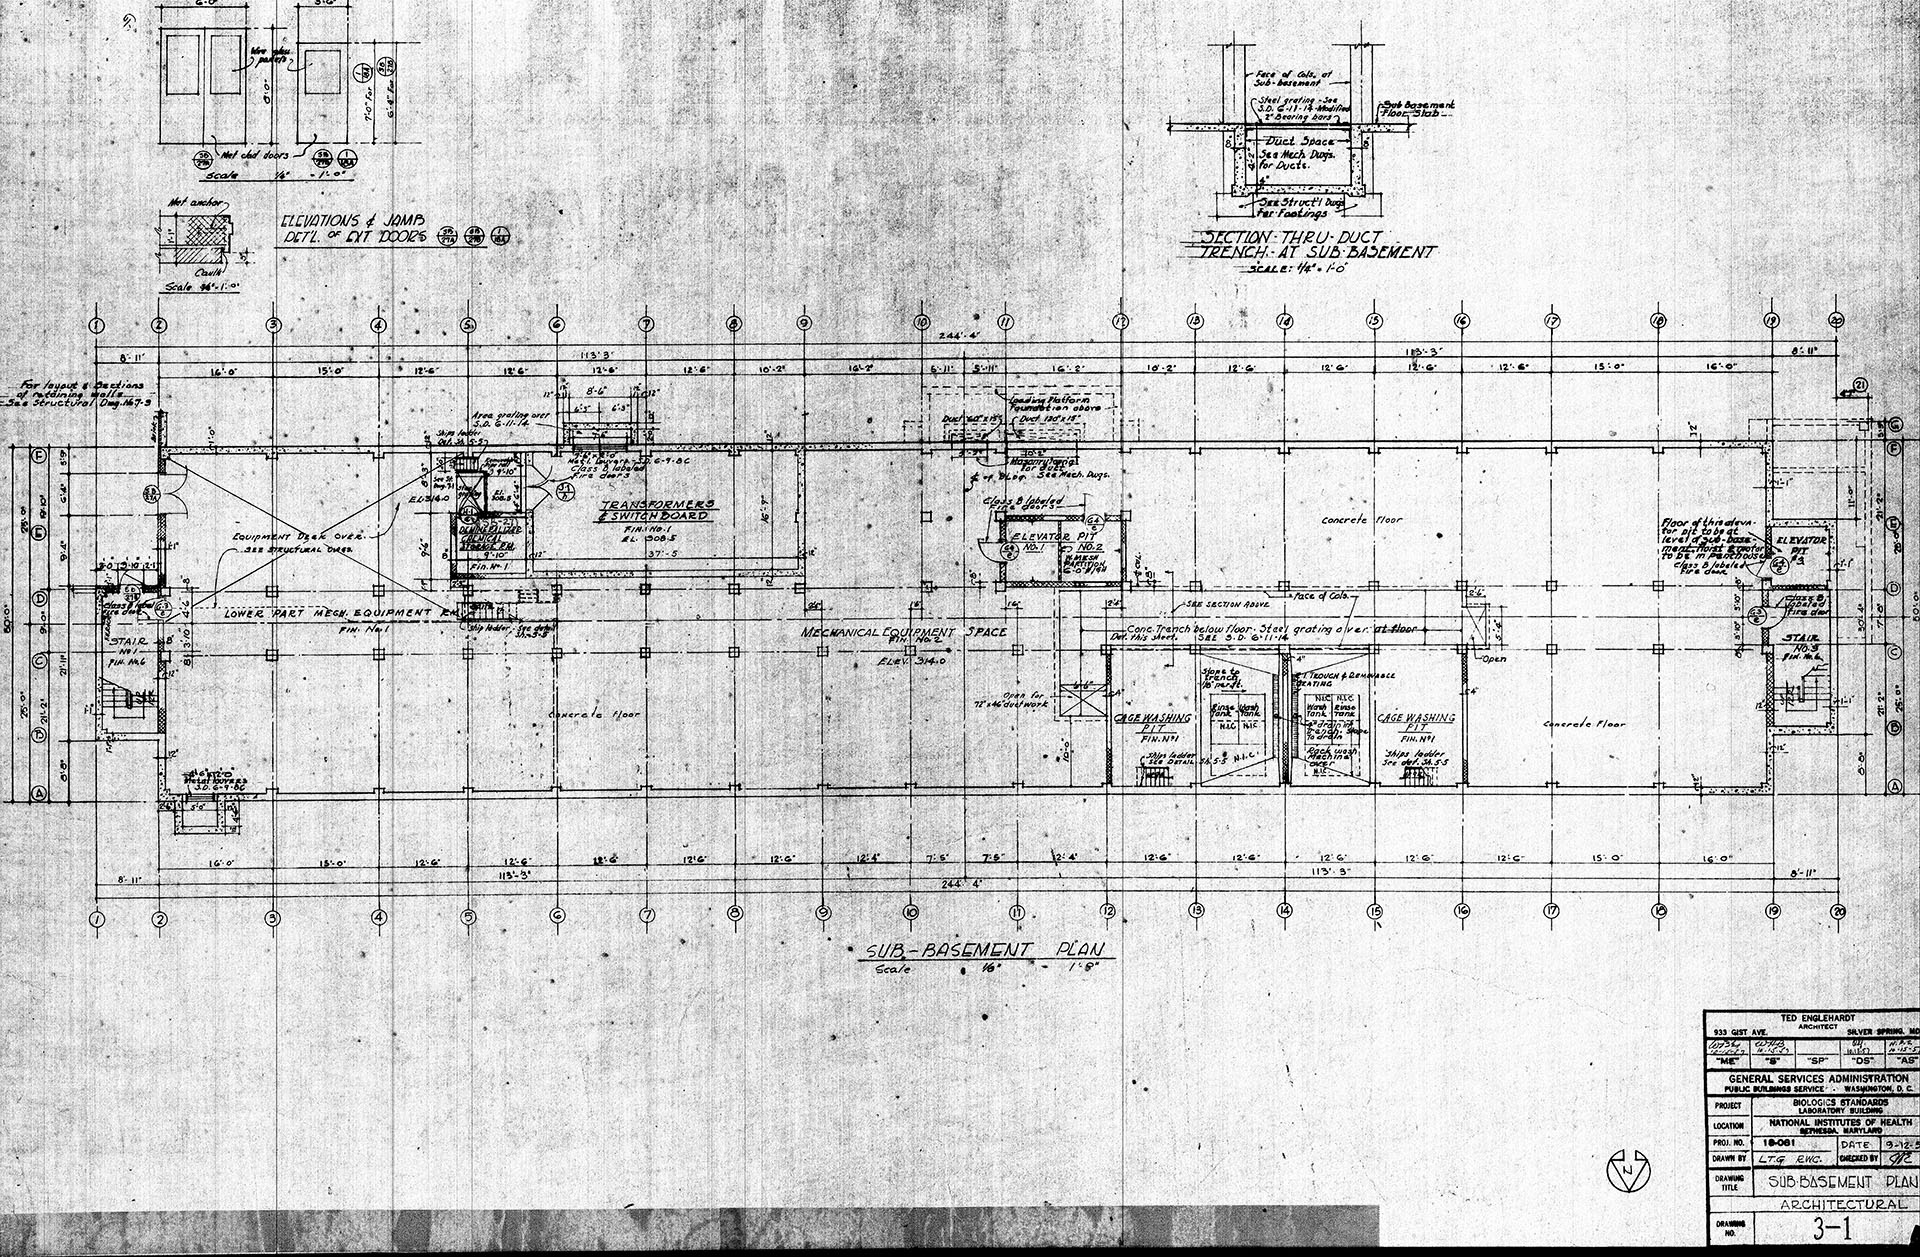 Sub-basement floor plan (mechanical space) of Building 29